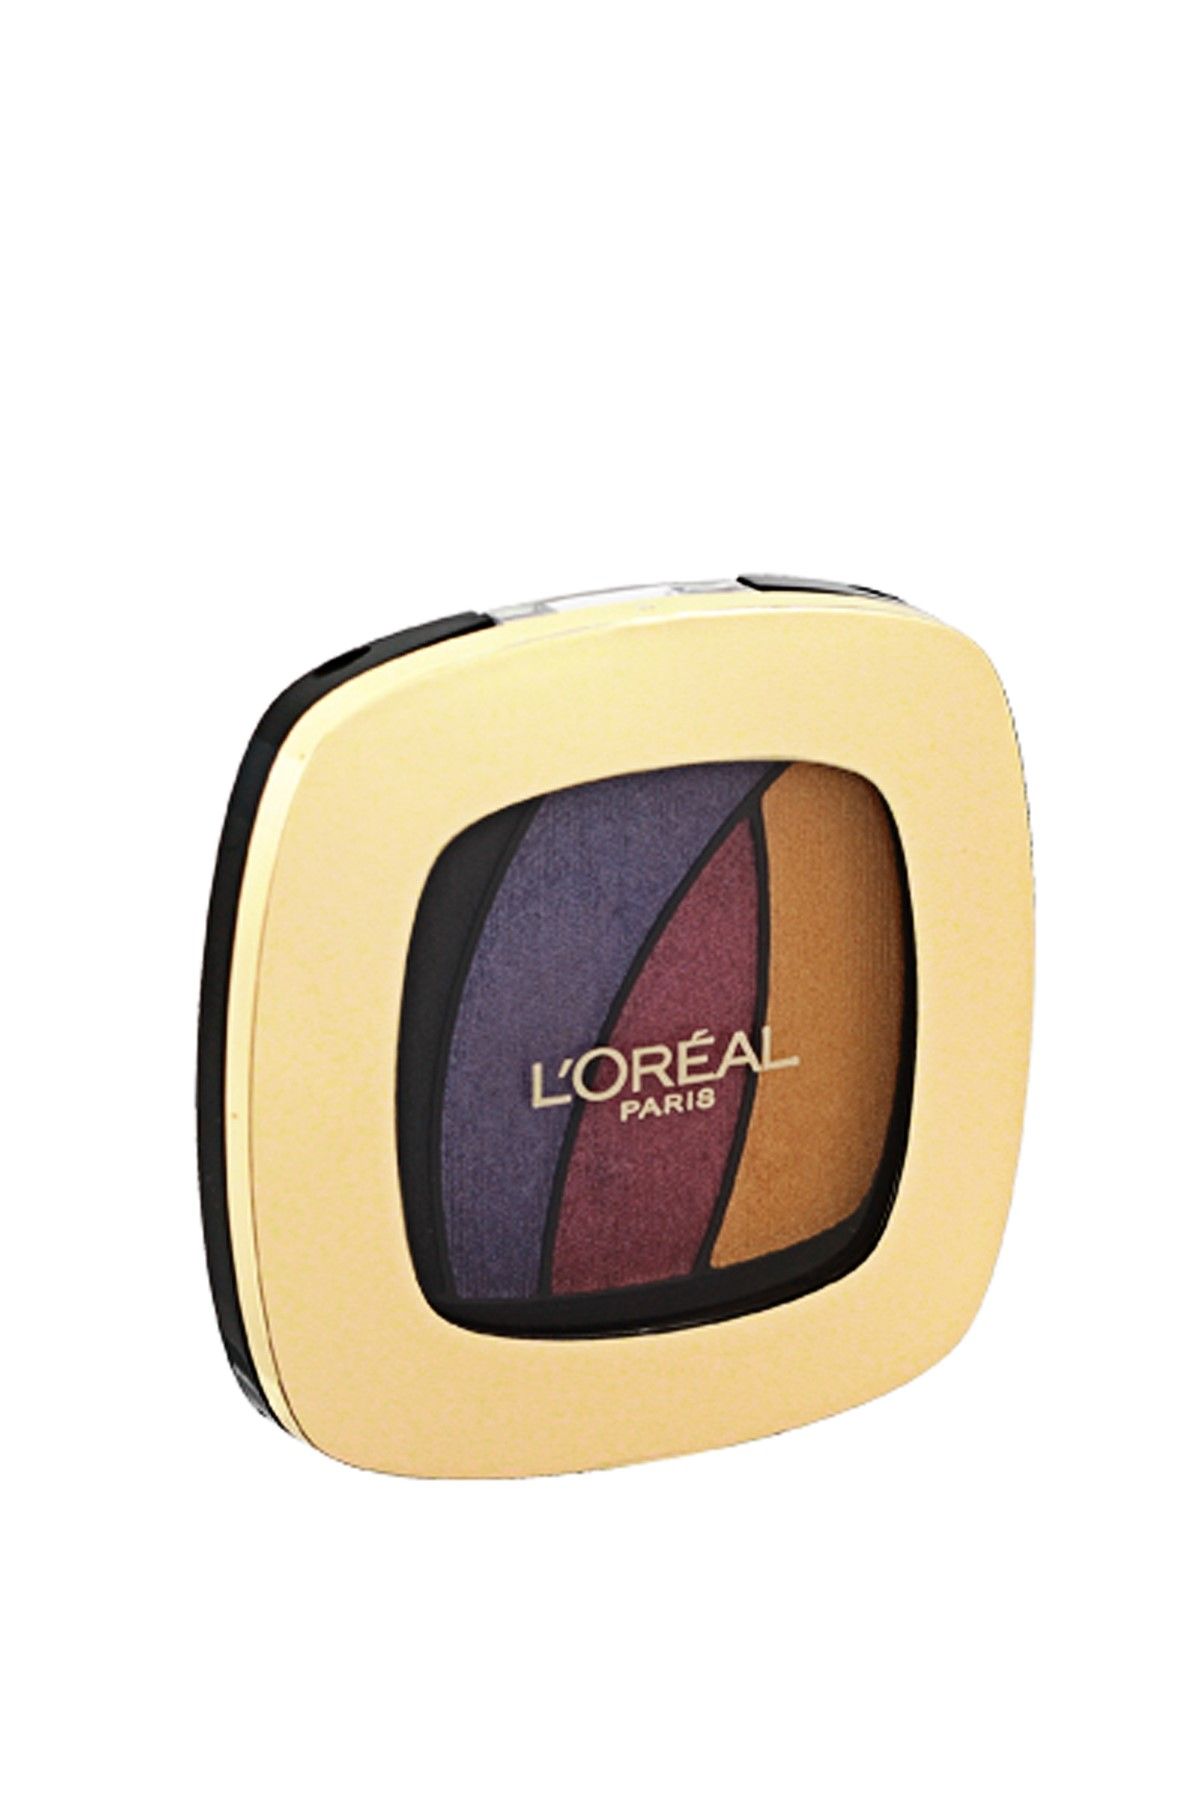 L'Oreal Paris Göz Farı - Color Riche Quad S3 Discosmoking 3600522203704